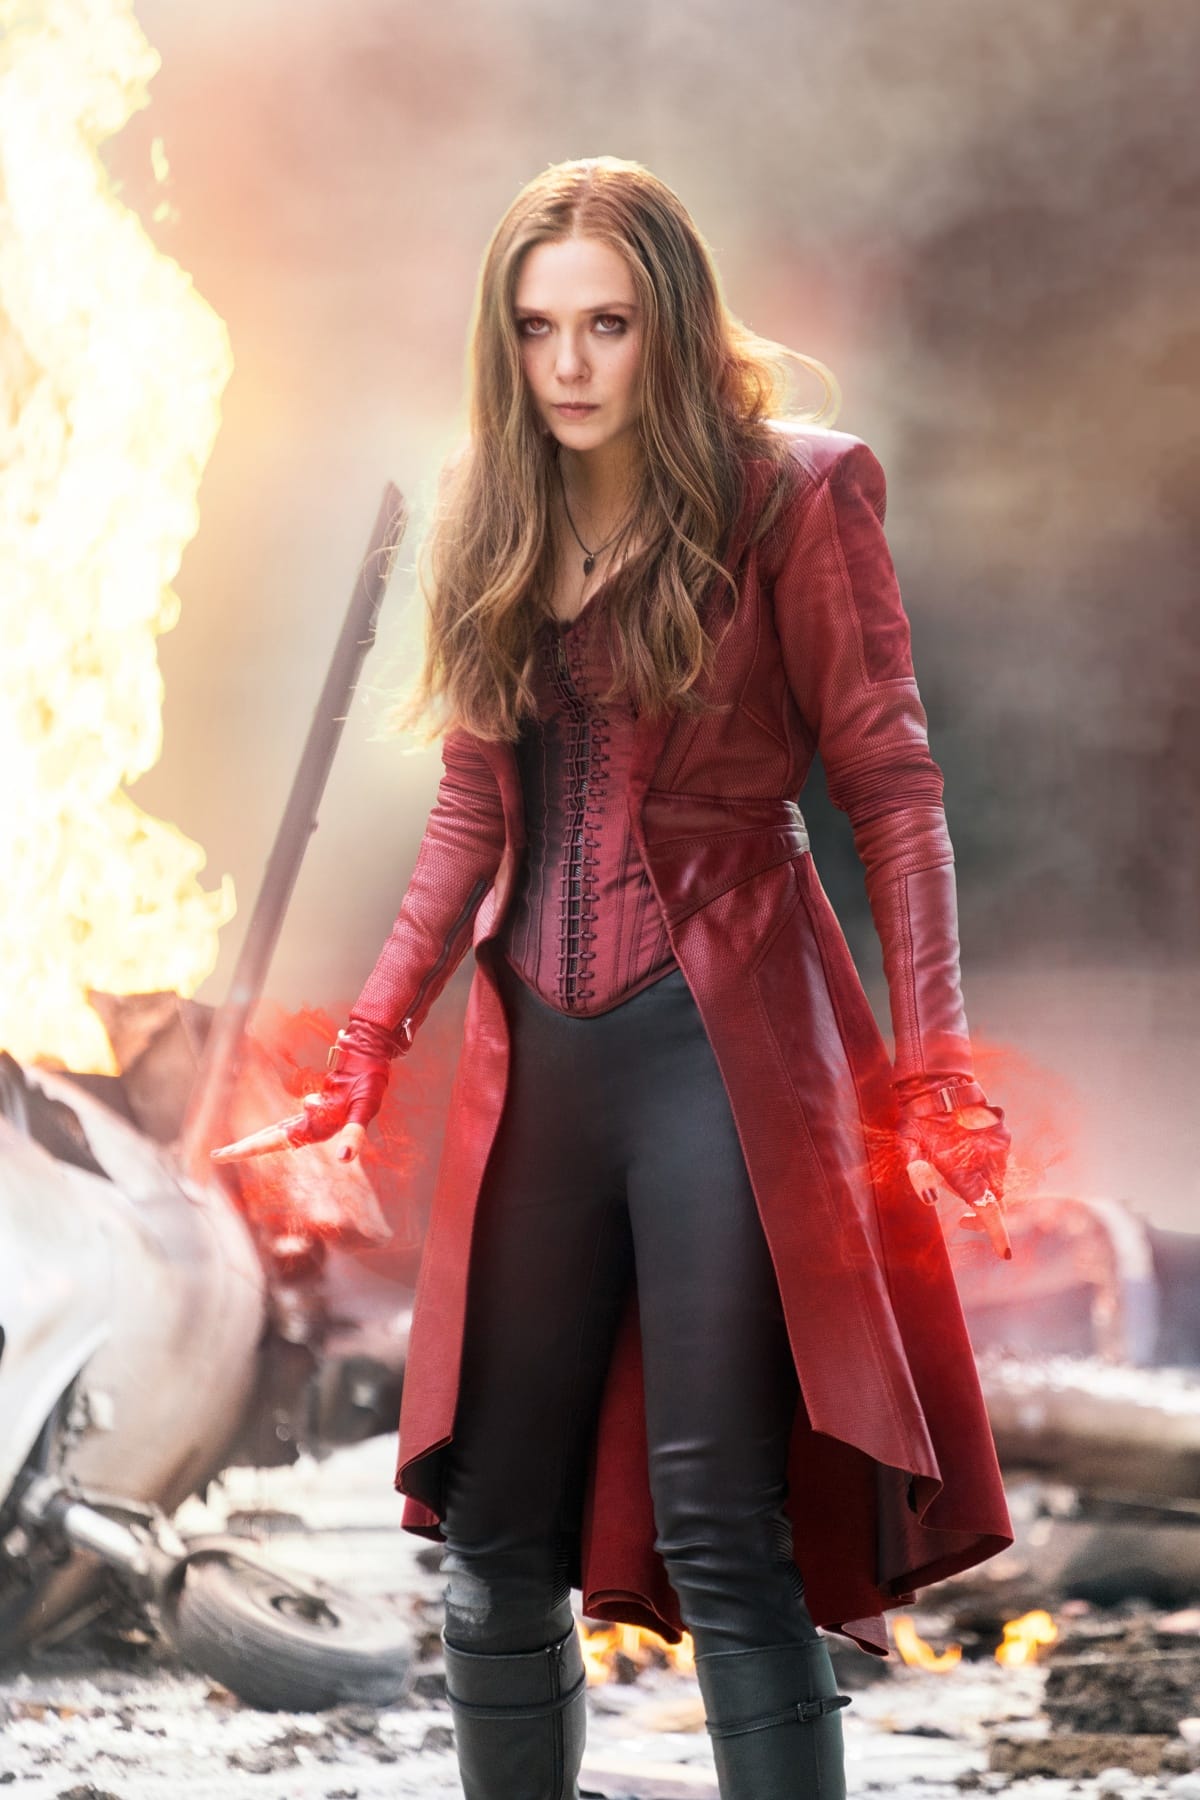 Elizabeth Olsen as Wanda Maximoff / Scarlet Witch in Captain America: Civil War